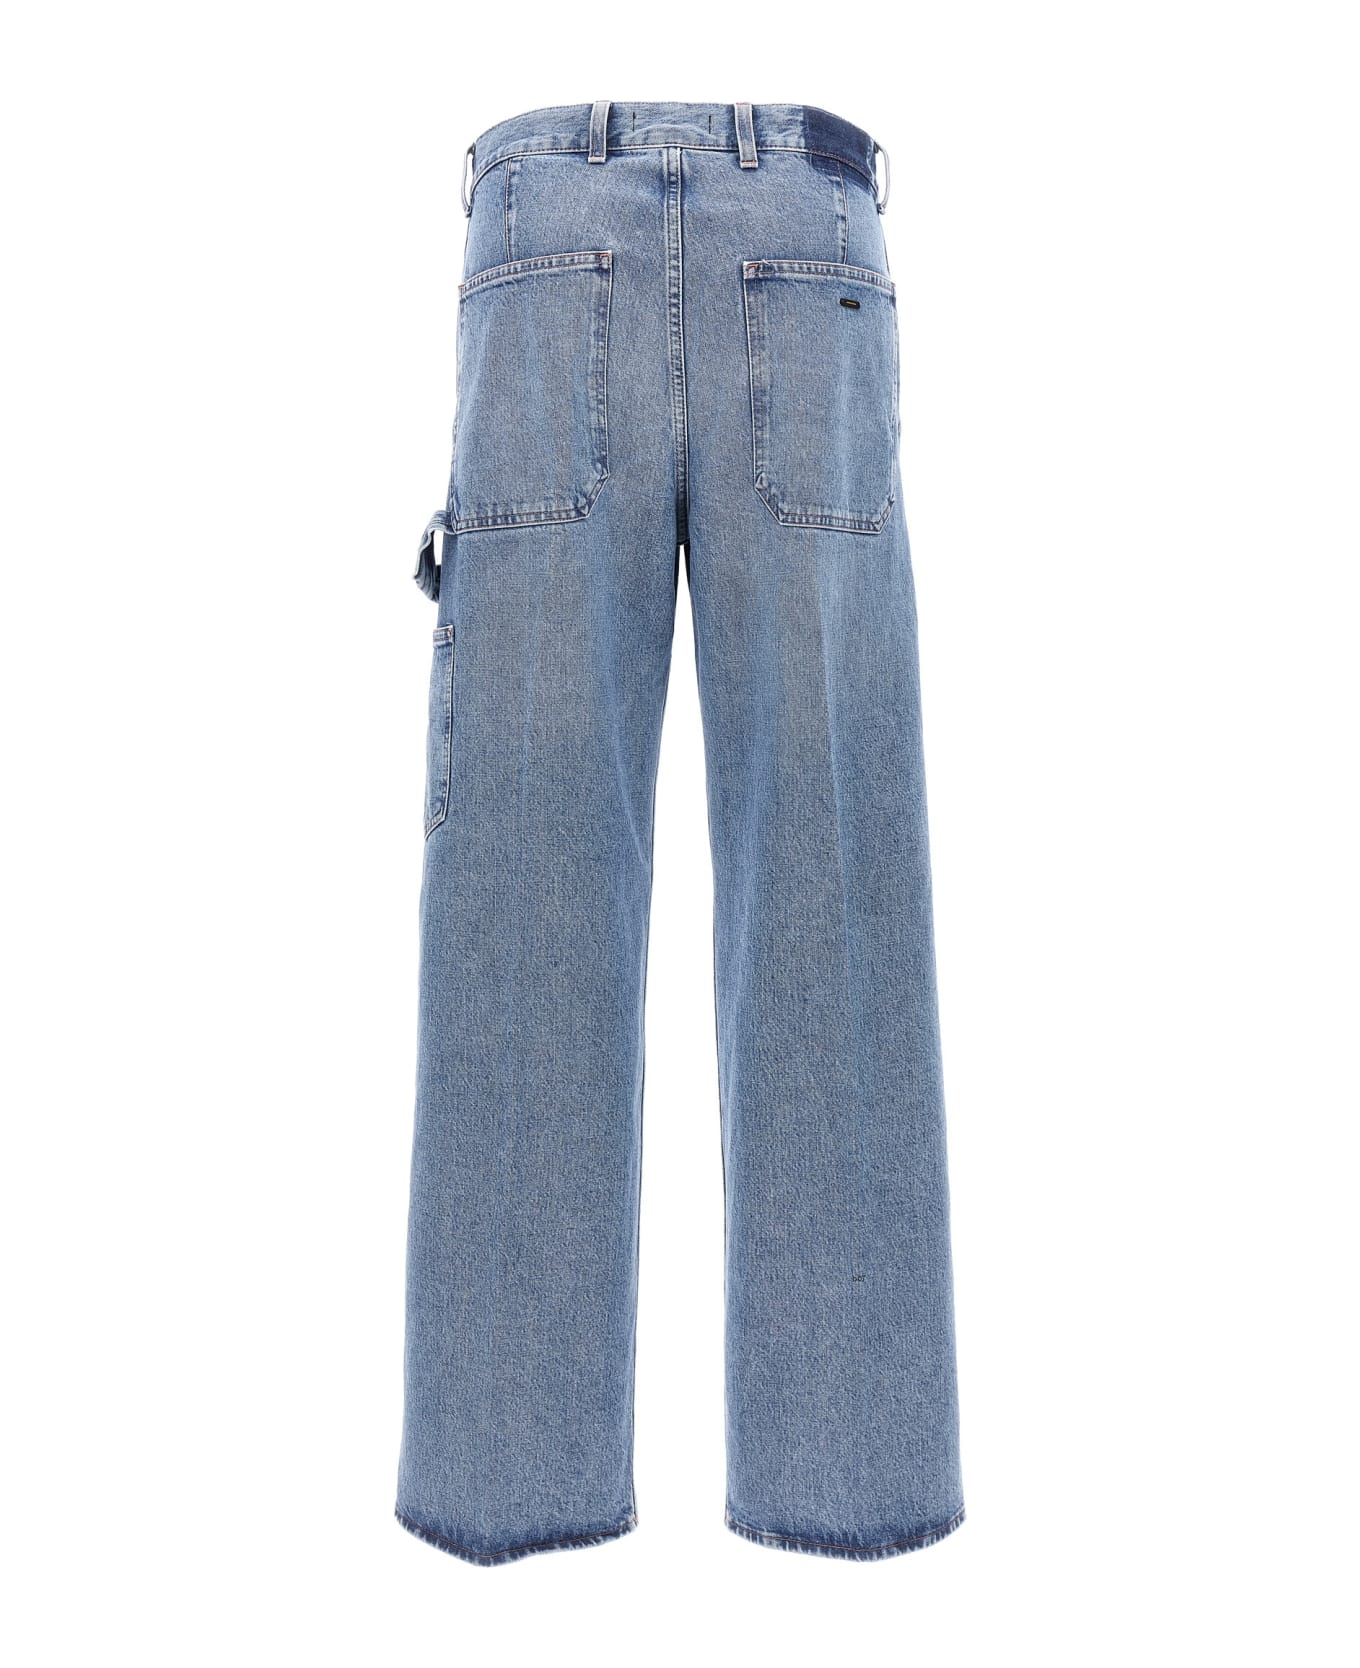 Made in Tomboy 'ko-work' Jeans - Light Blue デニム